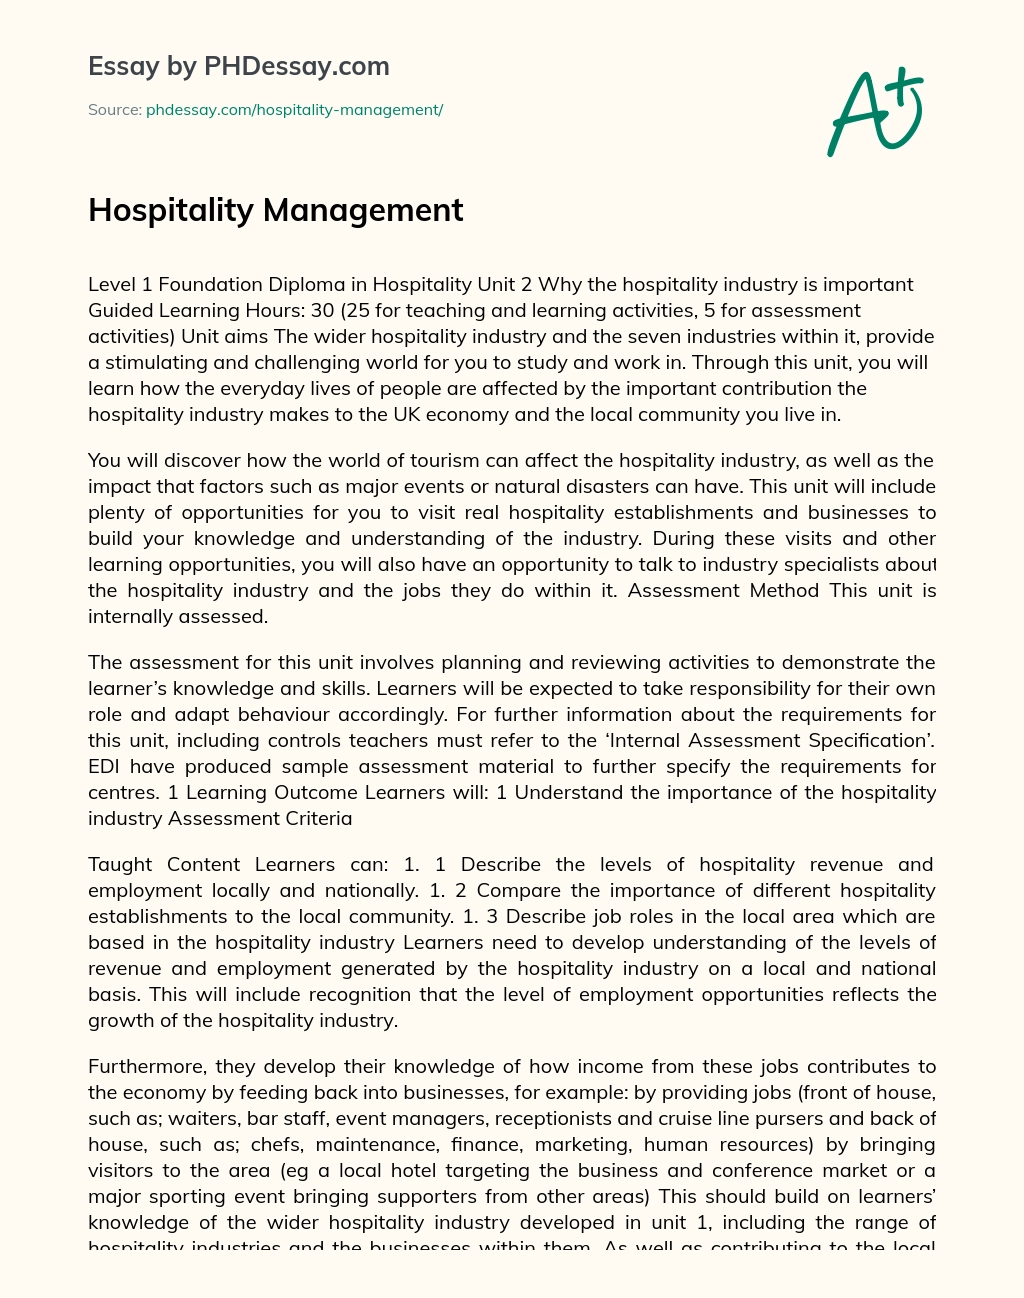 argumentative essay about hospitality management